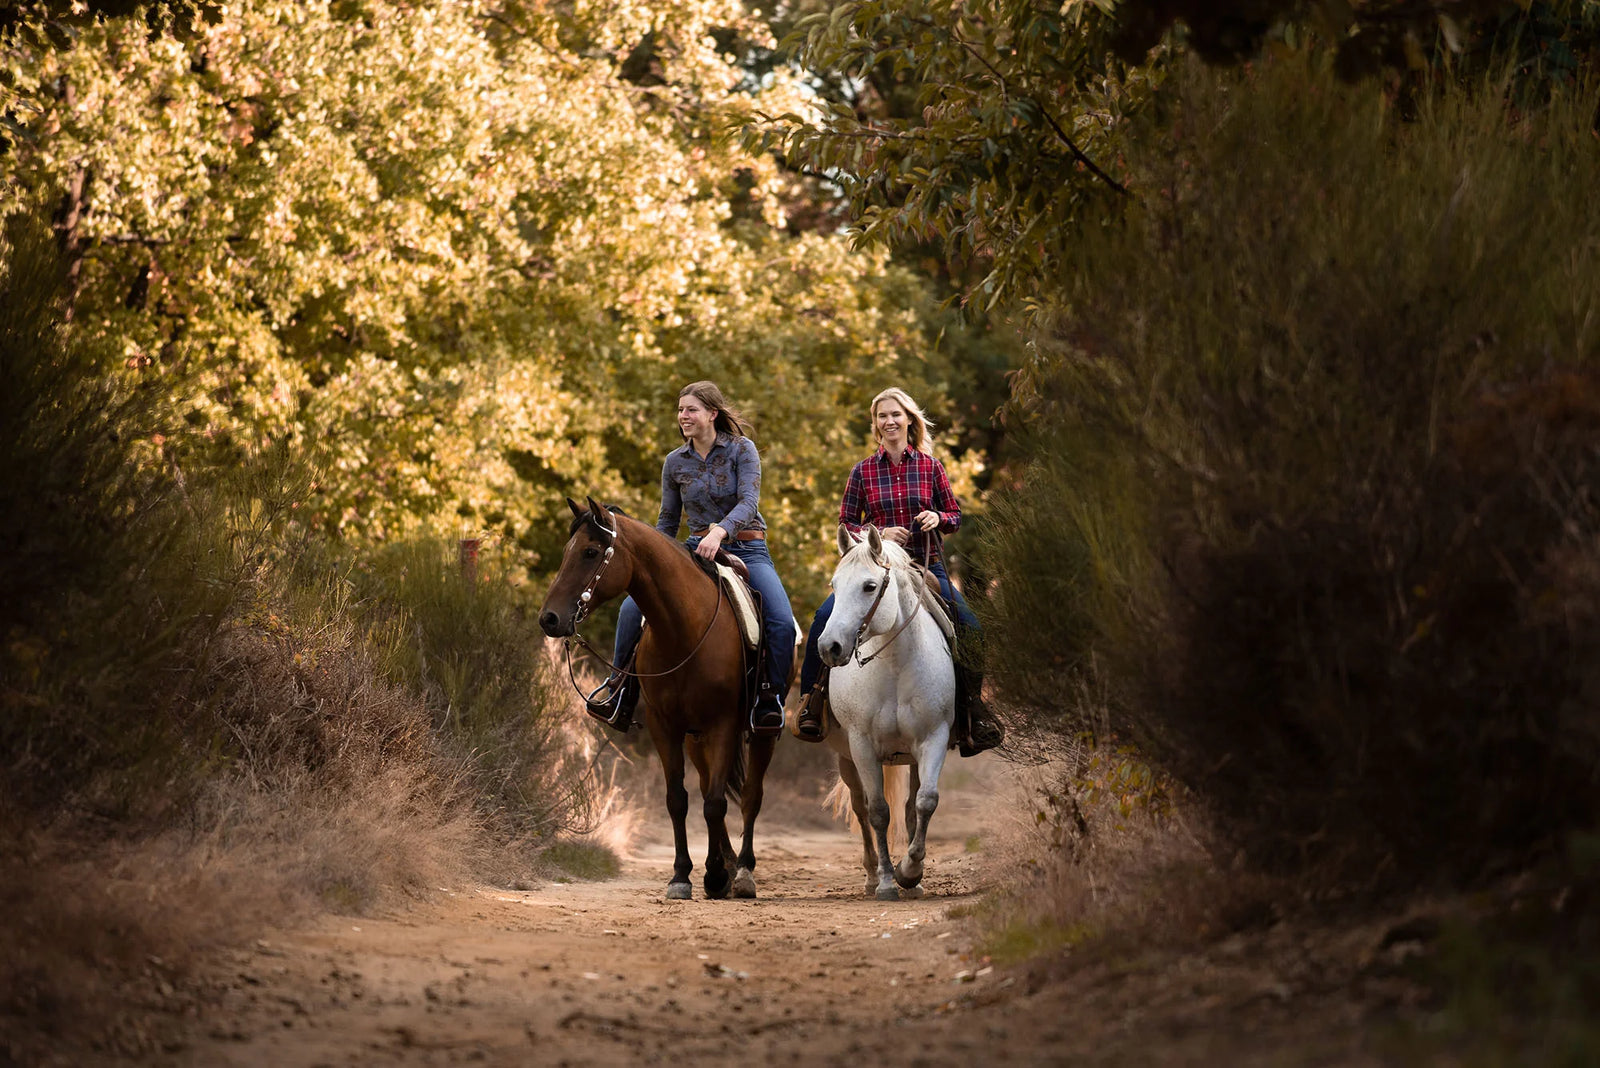 Two women riding horses through a trail